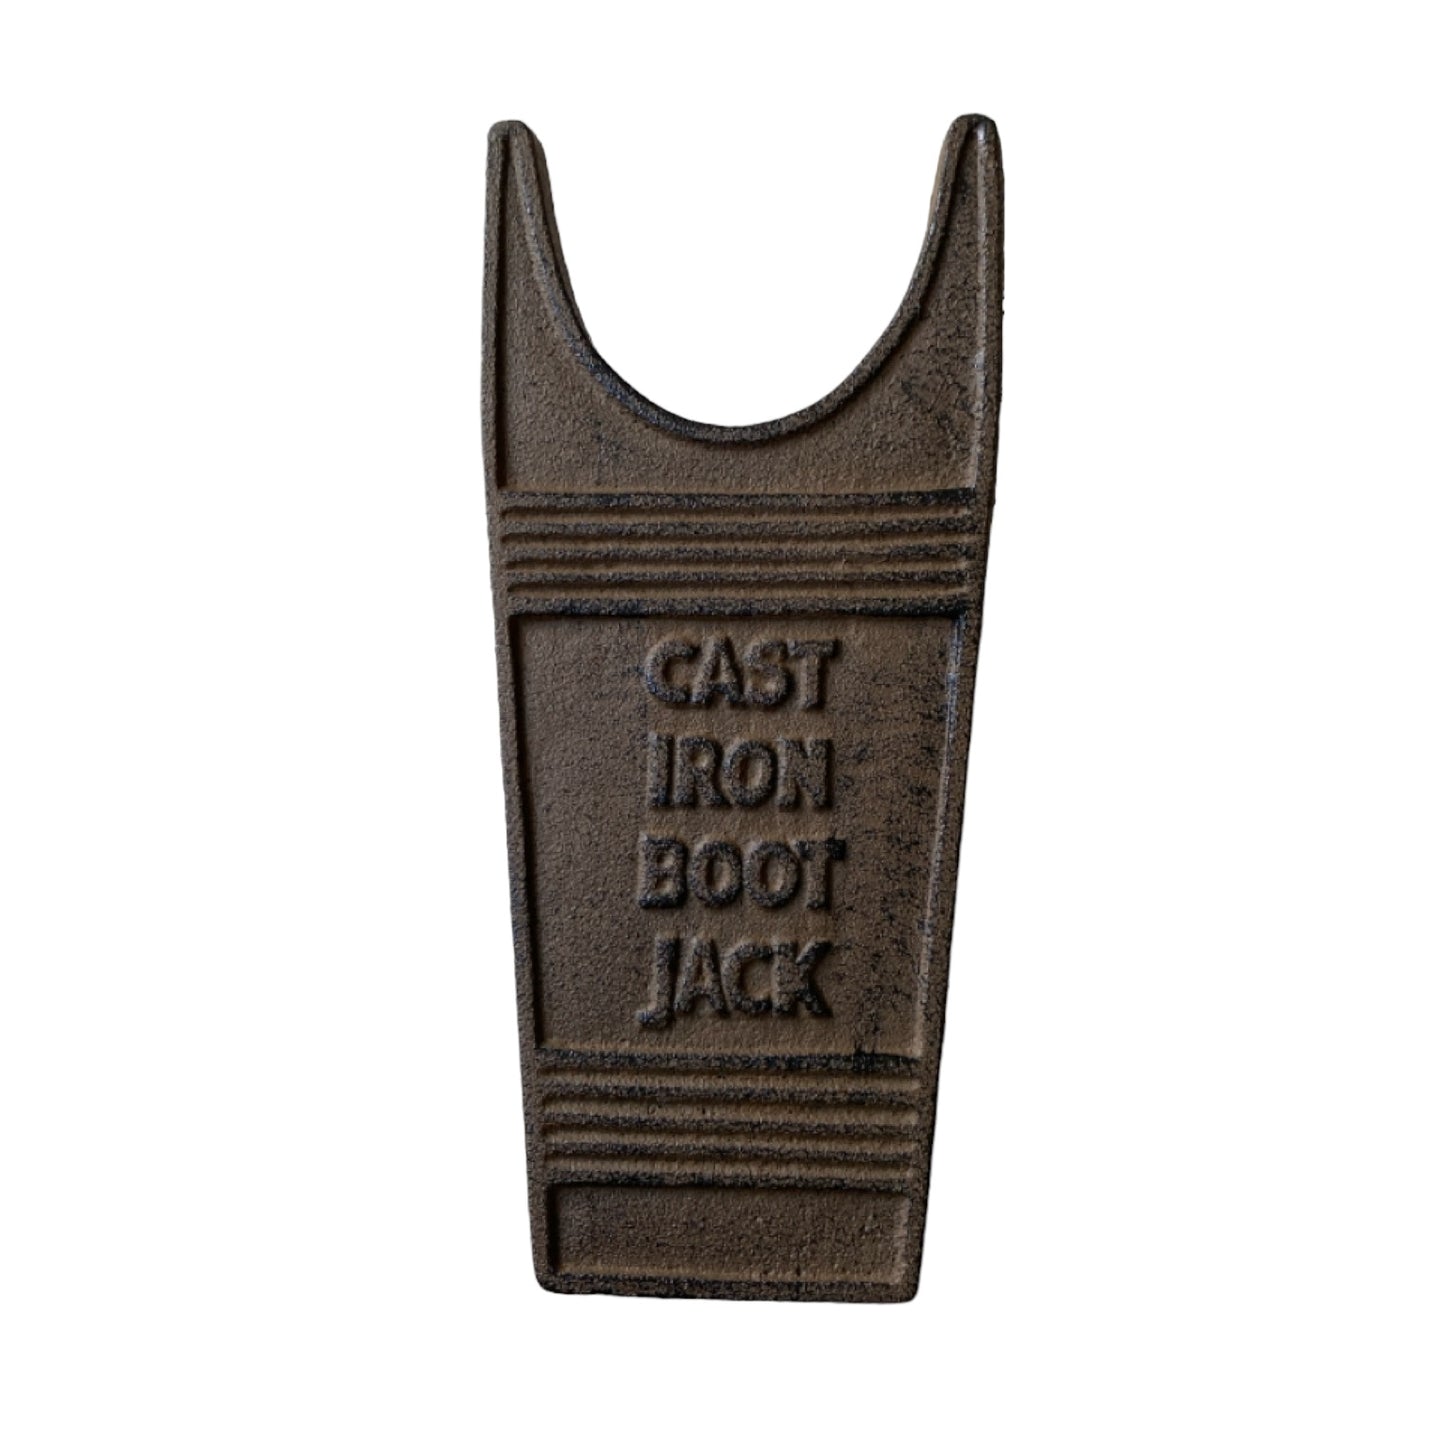 Boot Jack Cast Iron Shoe Rustic